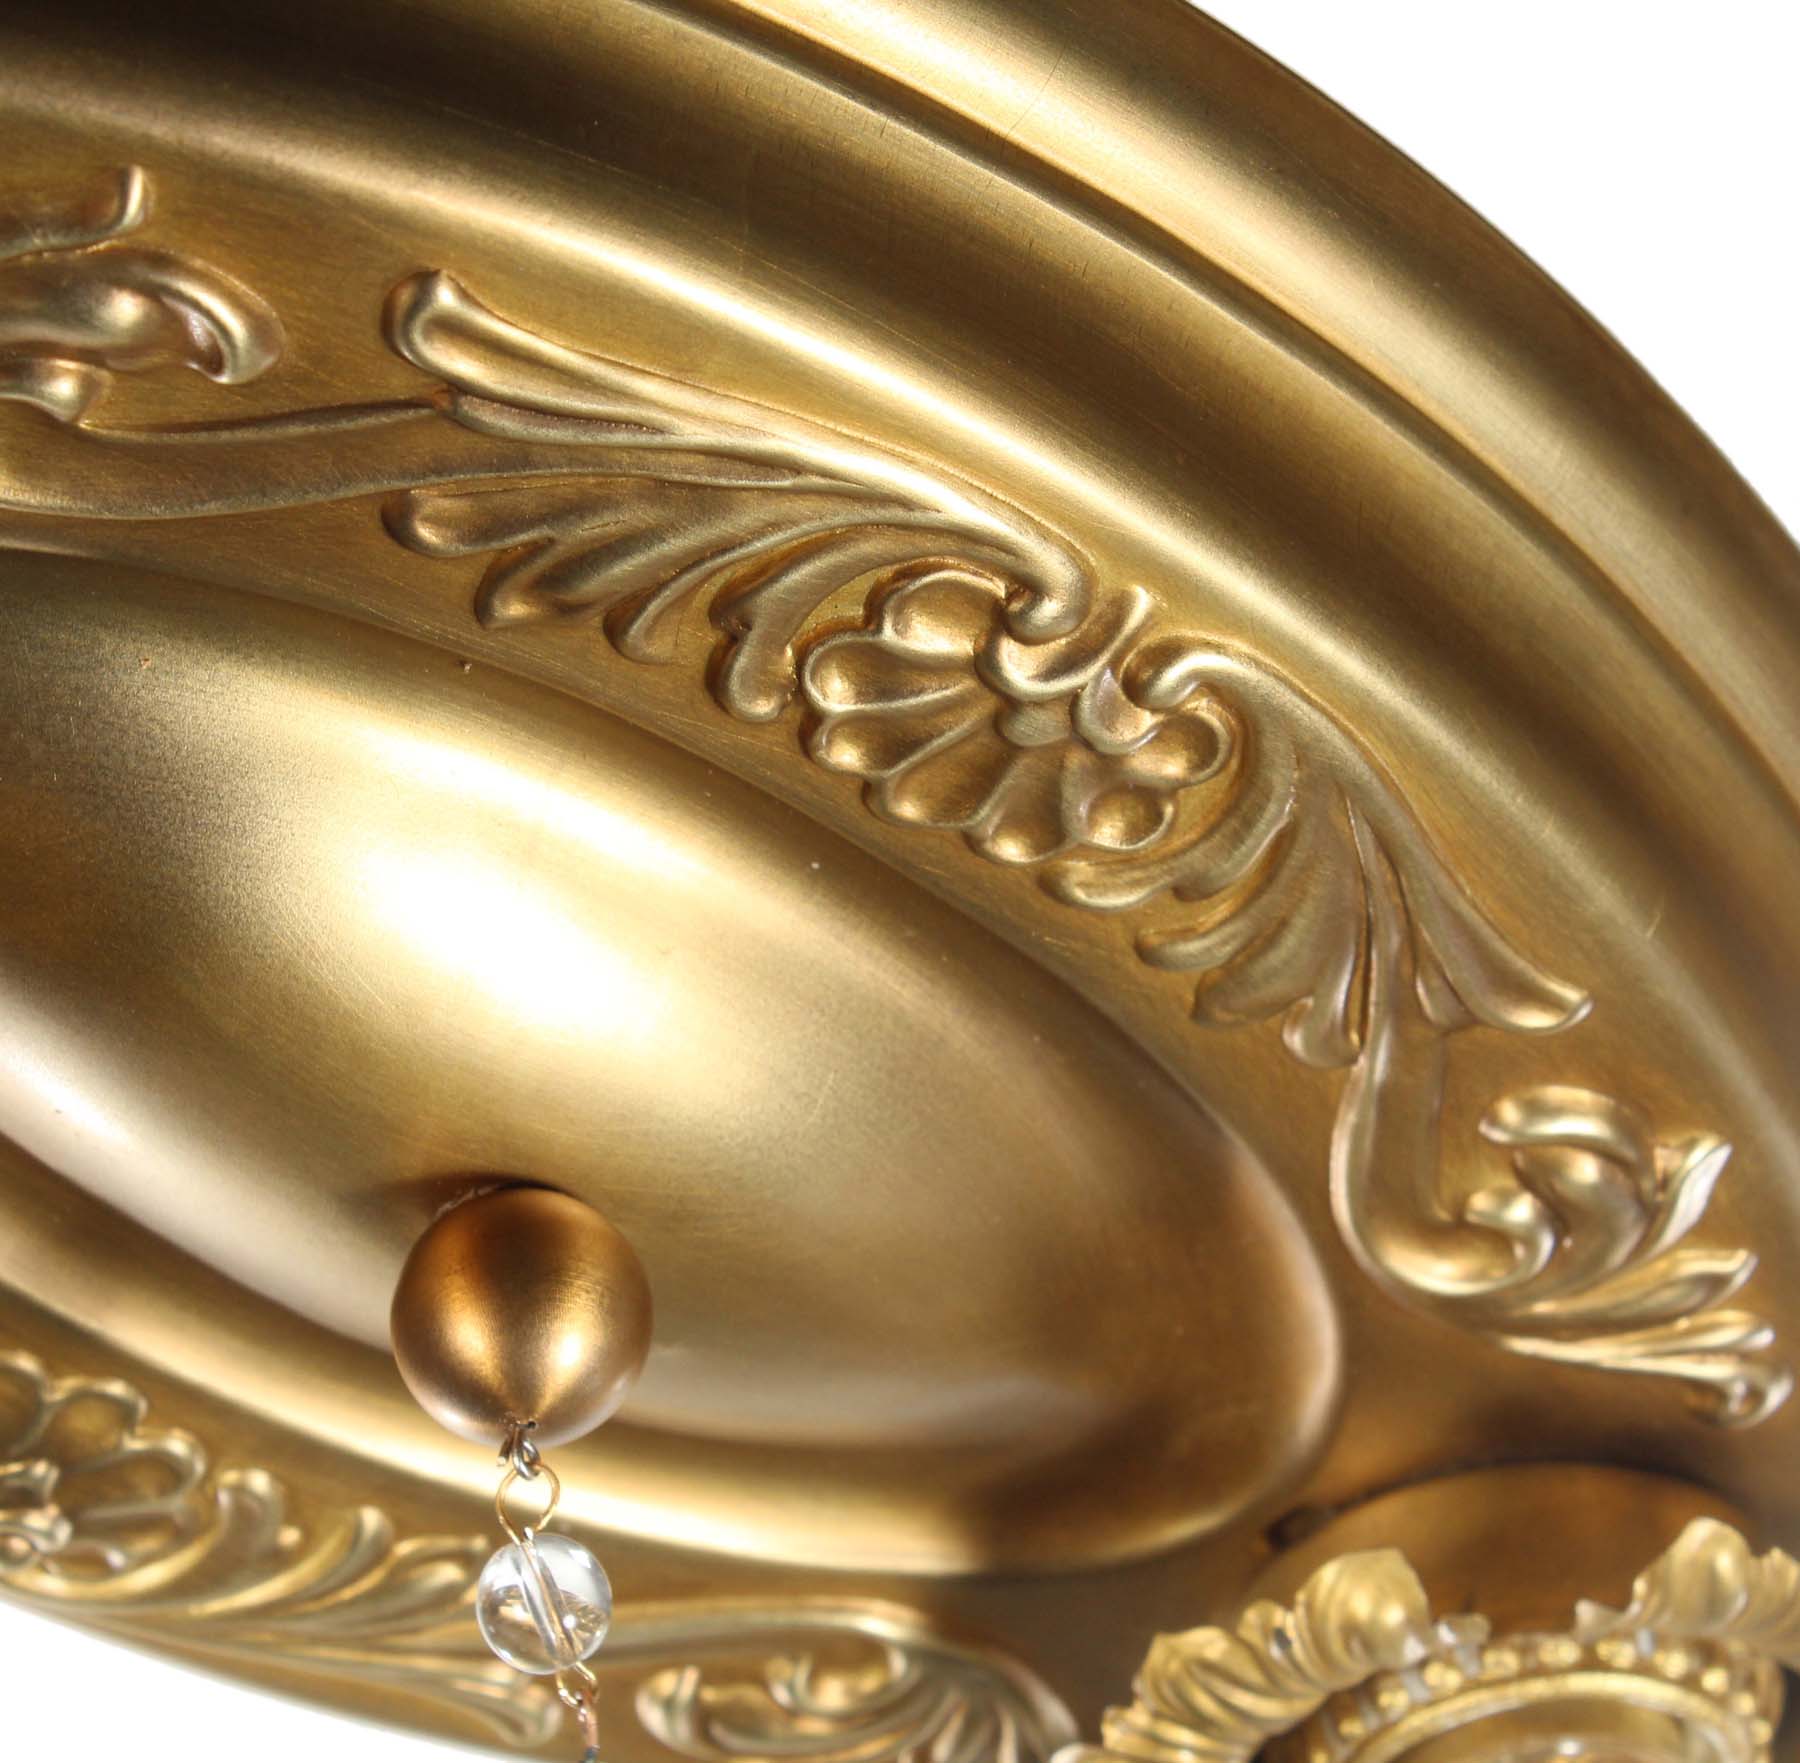 SOLD Neoclassical Flush Mount Fixtures in Brass, Antique Lighting-68403